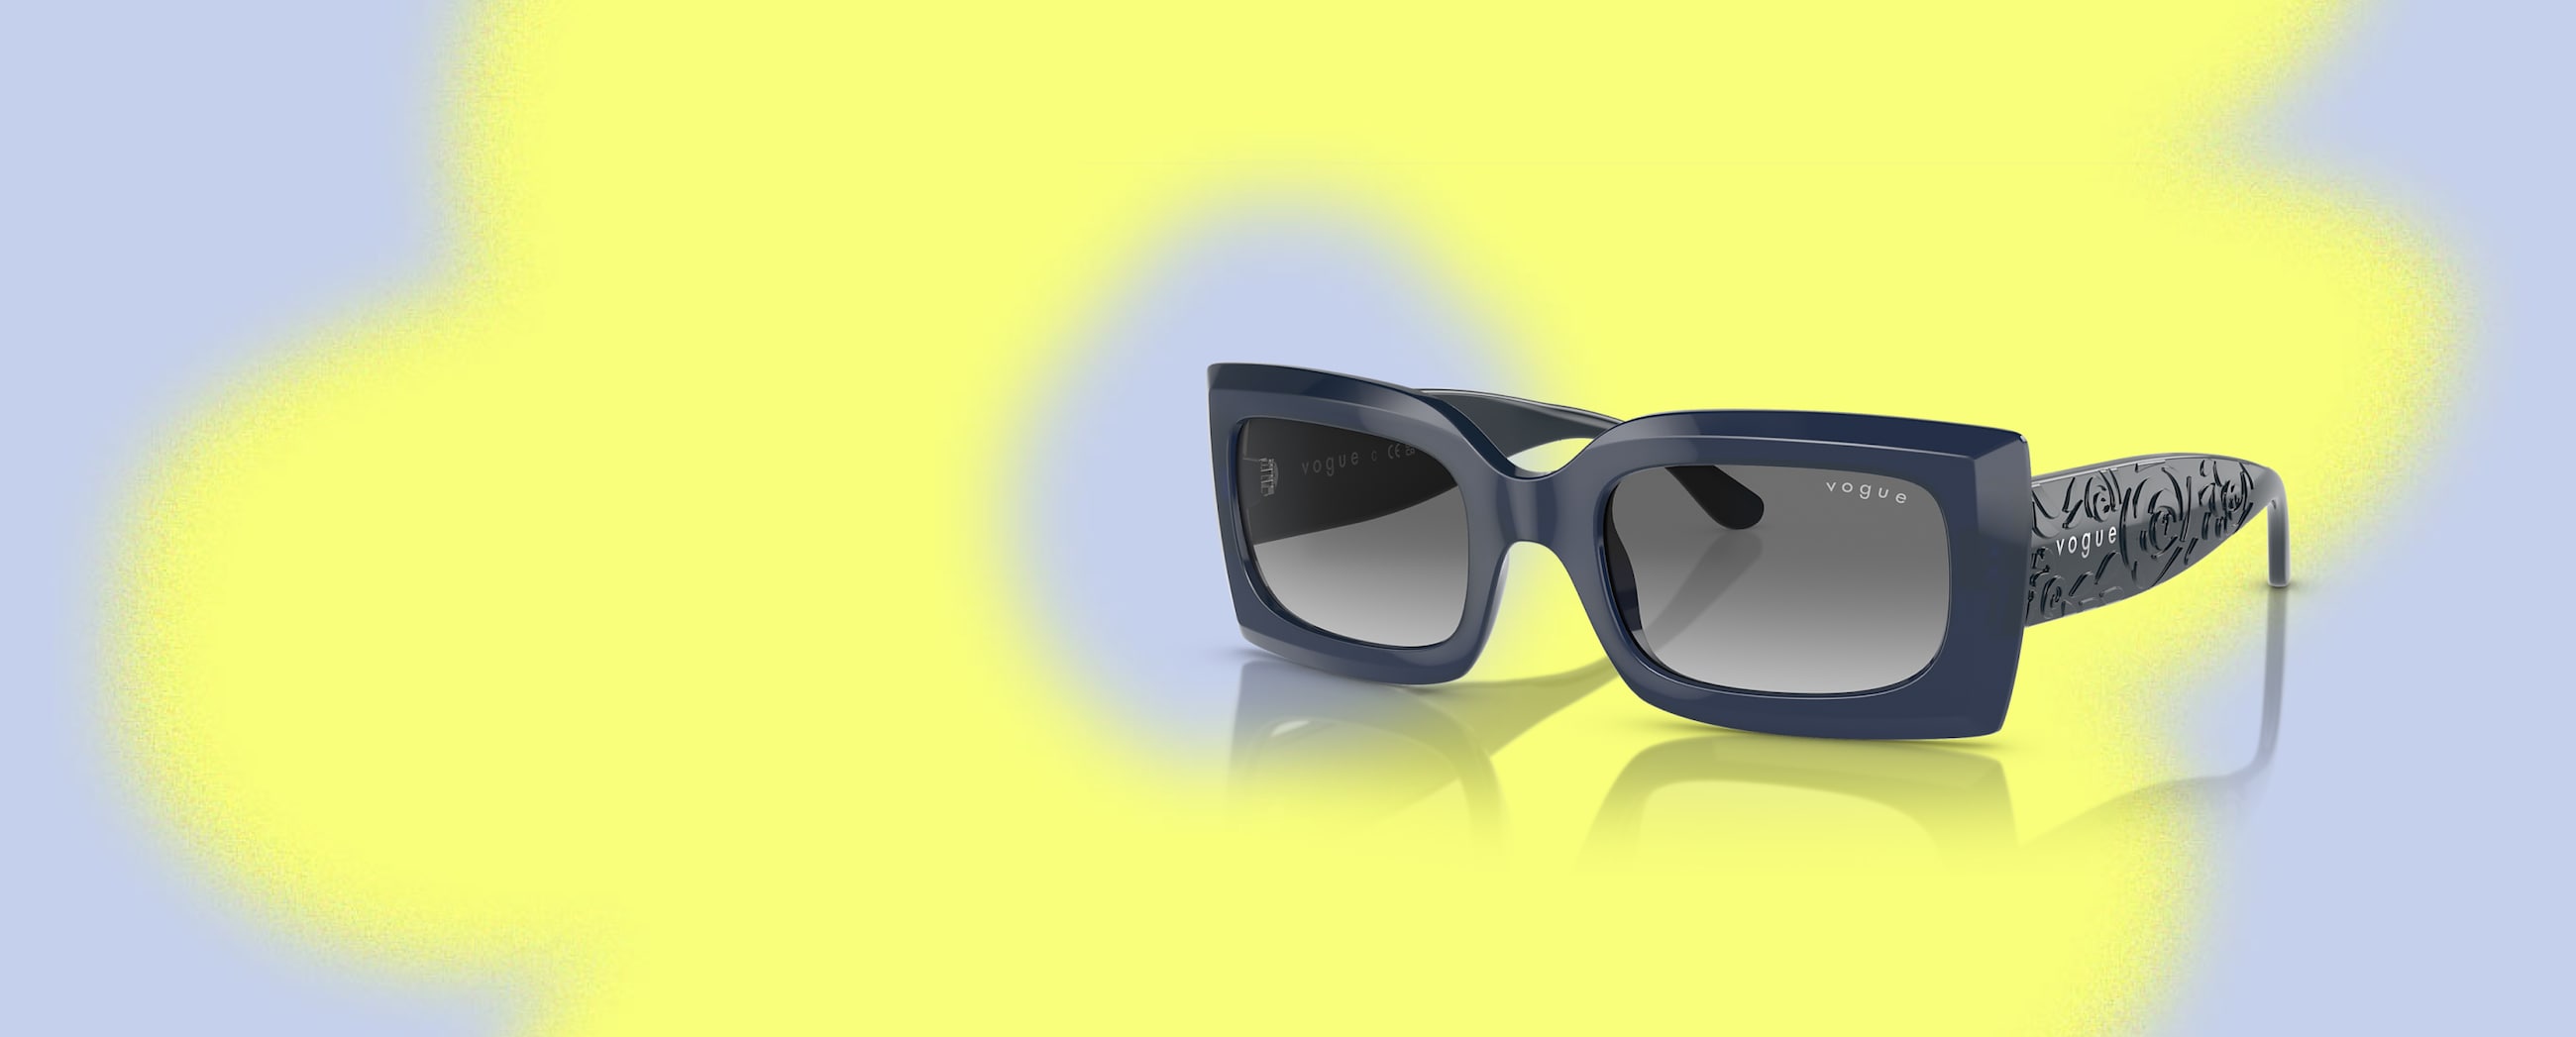 Sccsport Eyeglasses Sunglasses Storage Display Stand Holder India | Ubuy